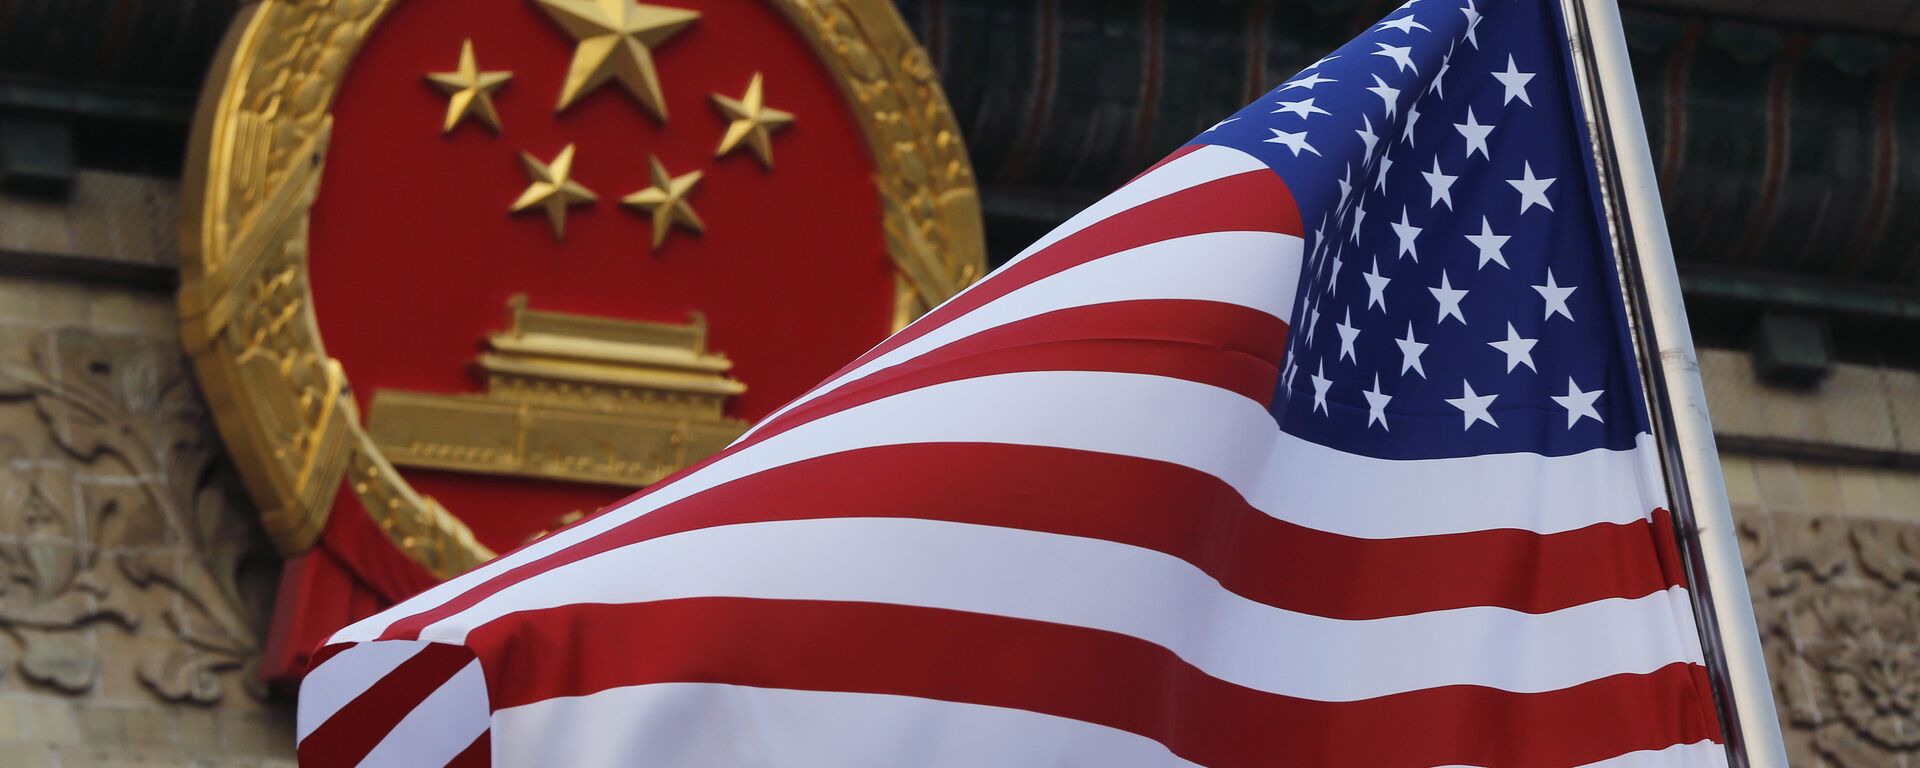 La bandera de EEUU y el emblema de China  - Sputnik Mundo, 1920, 14.01.2021